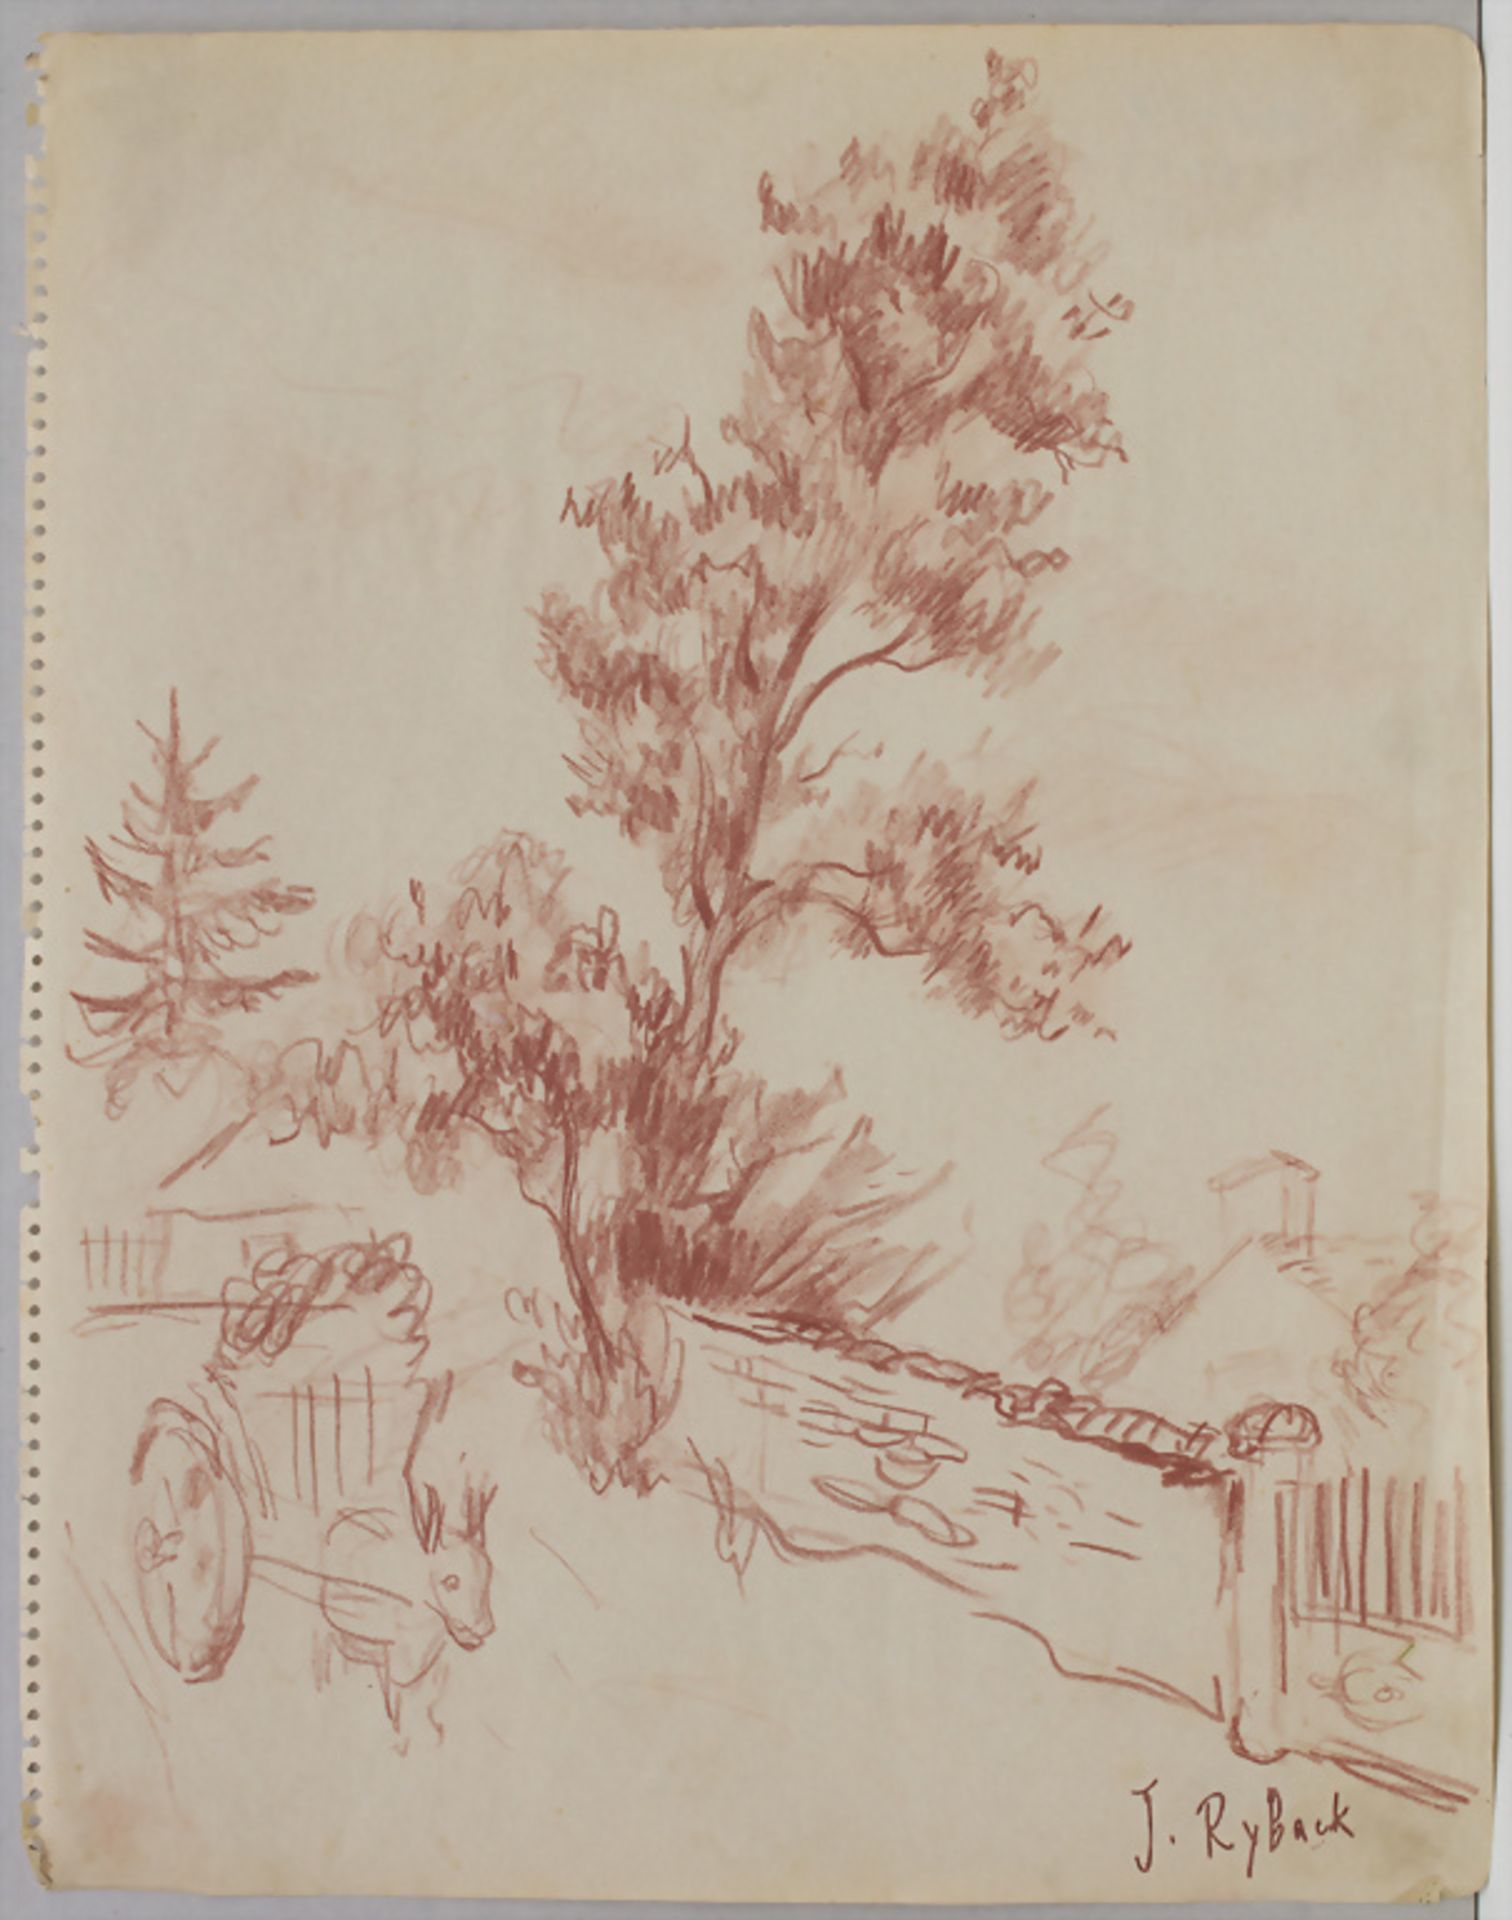 Issachar Ber Ryback (1897-1935), 'Dorfweg mit Eselskarren' / 'A village path with donkey cart'